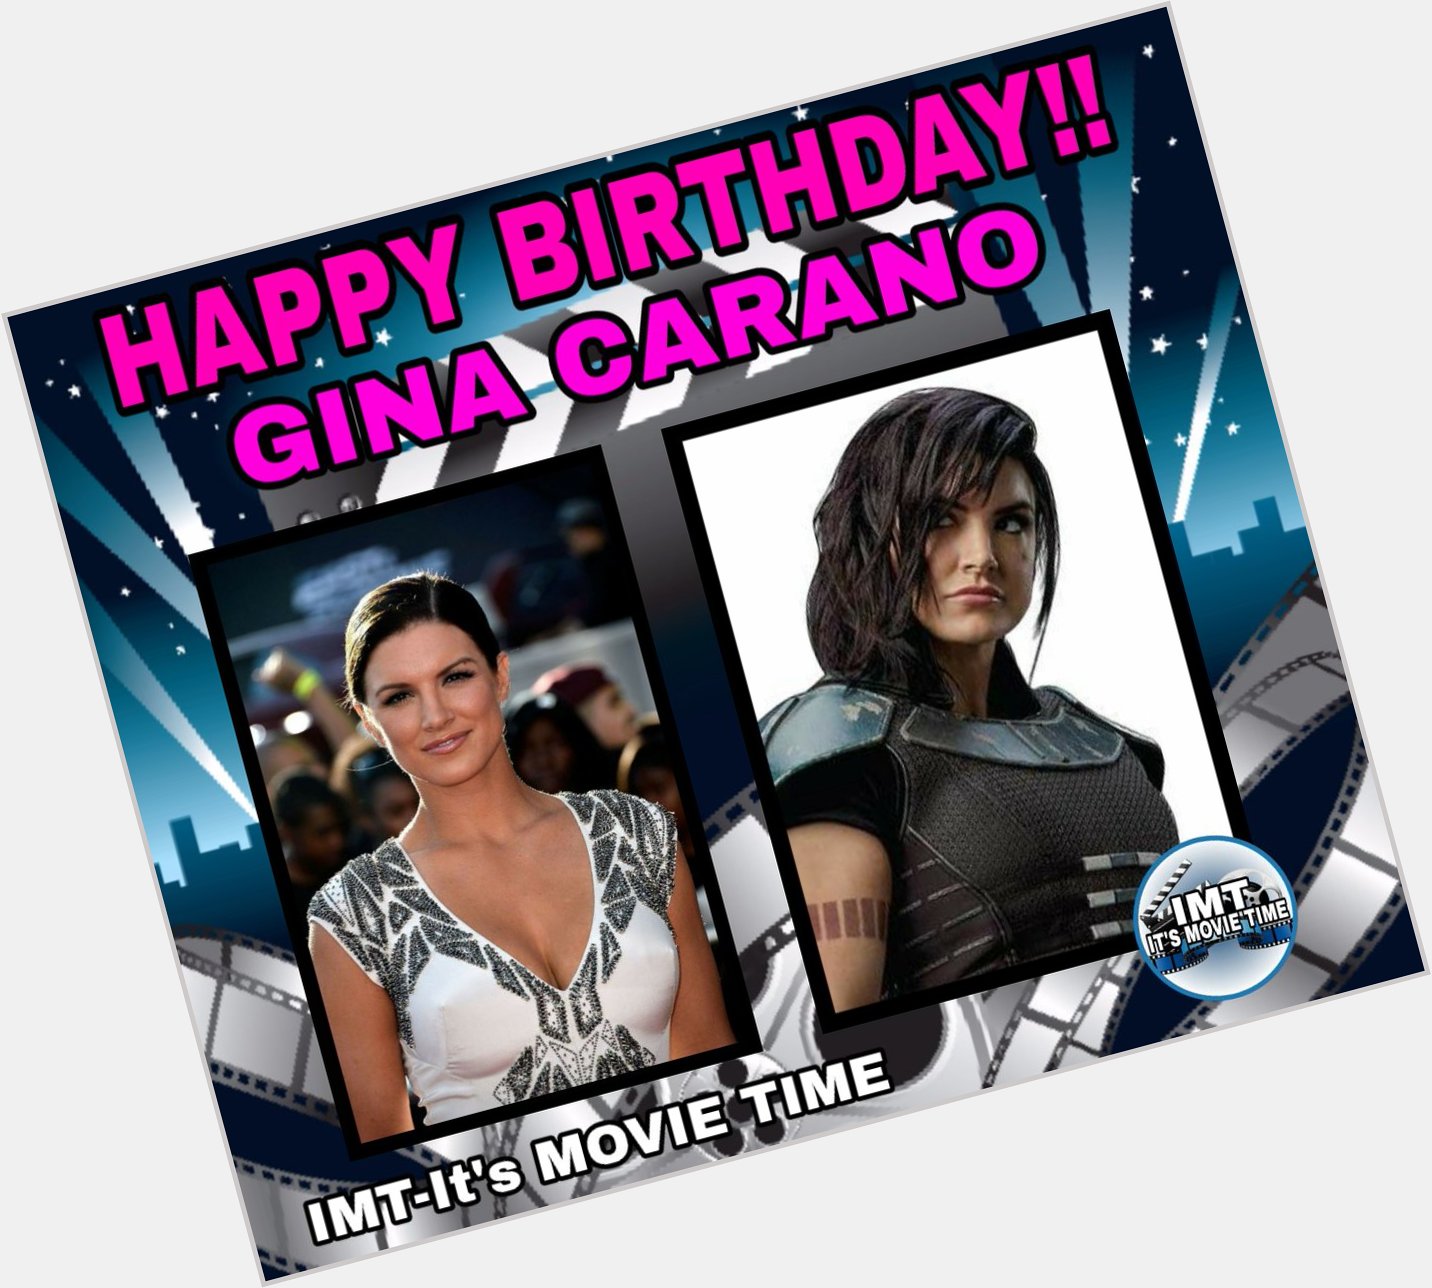 Happy Birthday to Gina Carano! She is celebrating 38 years. 